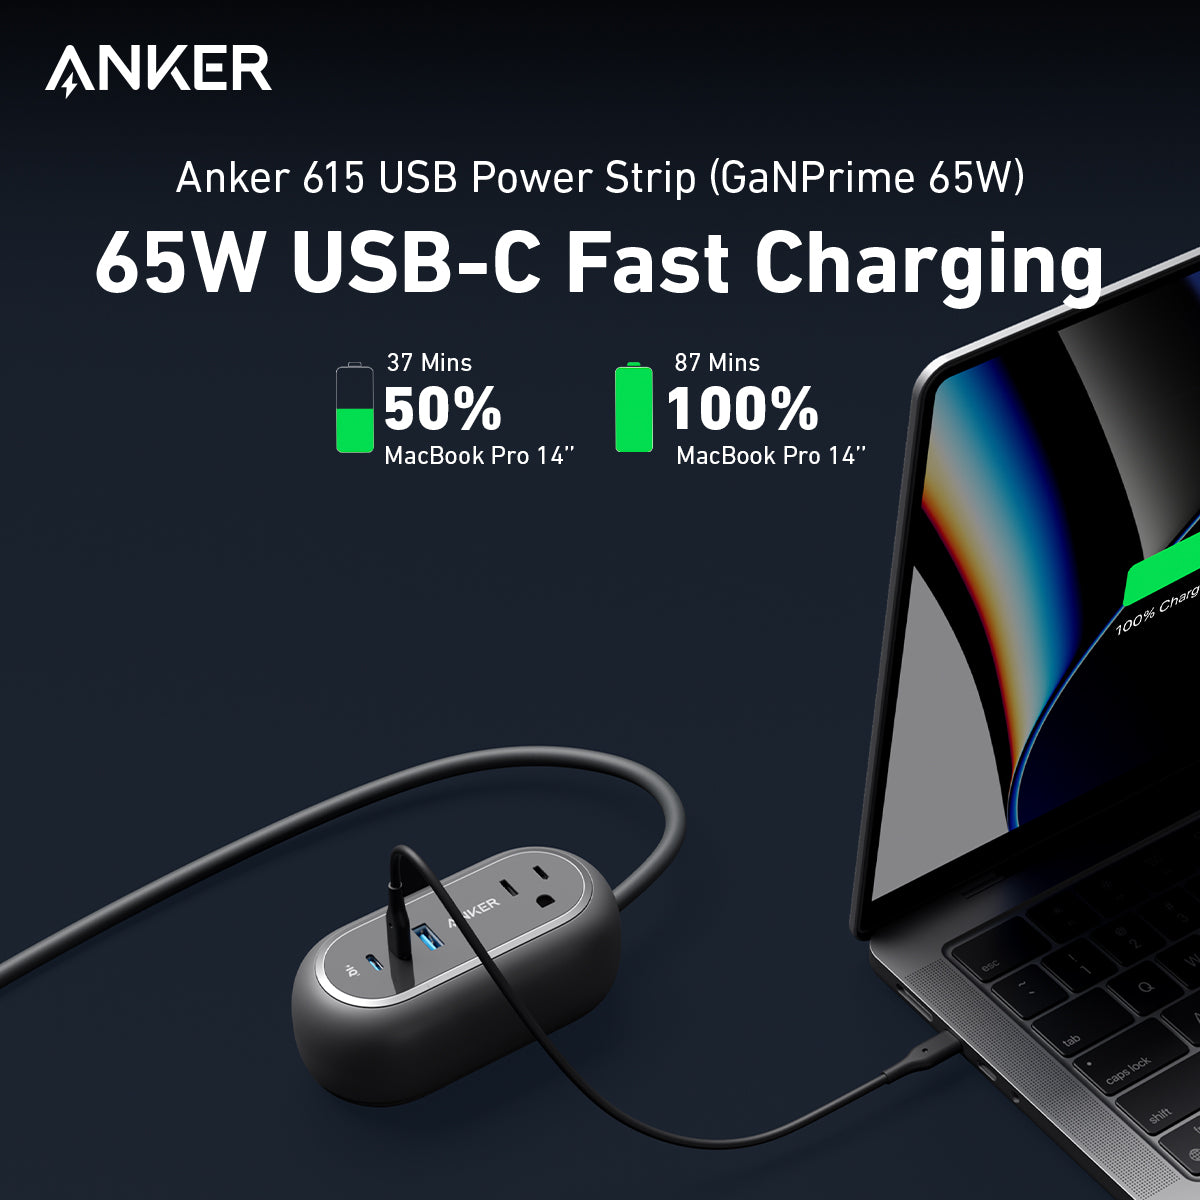 Anker 615 USB Power Strip (GaNPrime 65W)